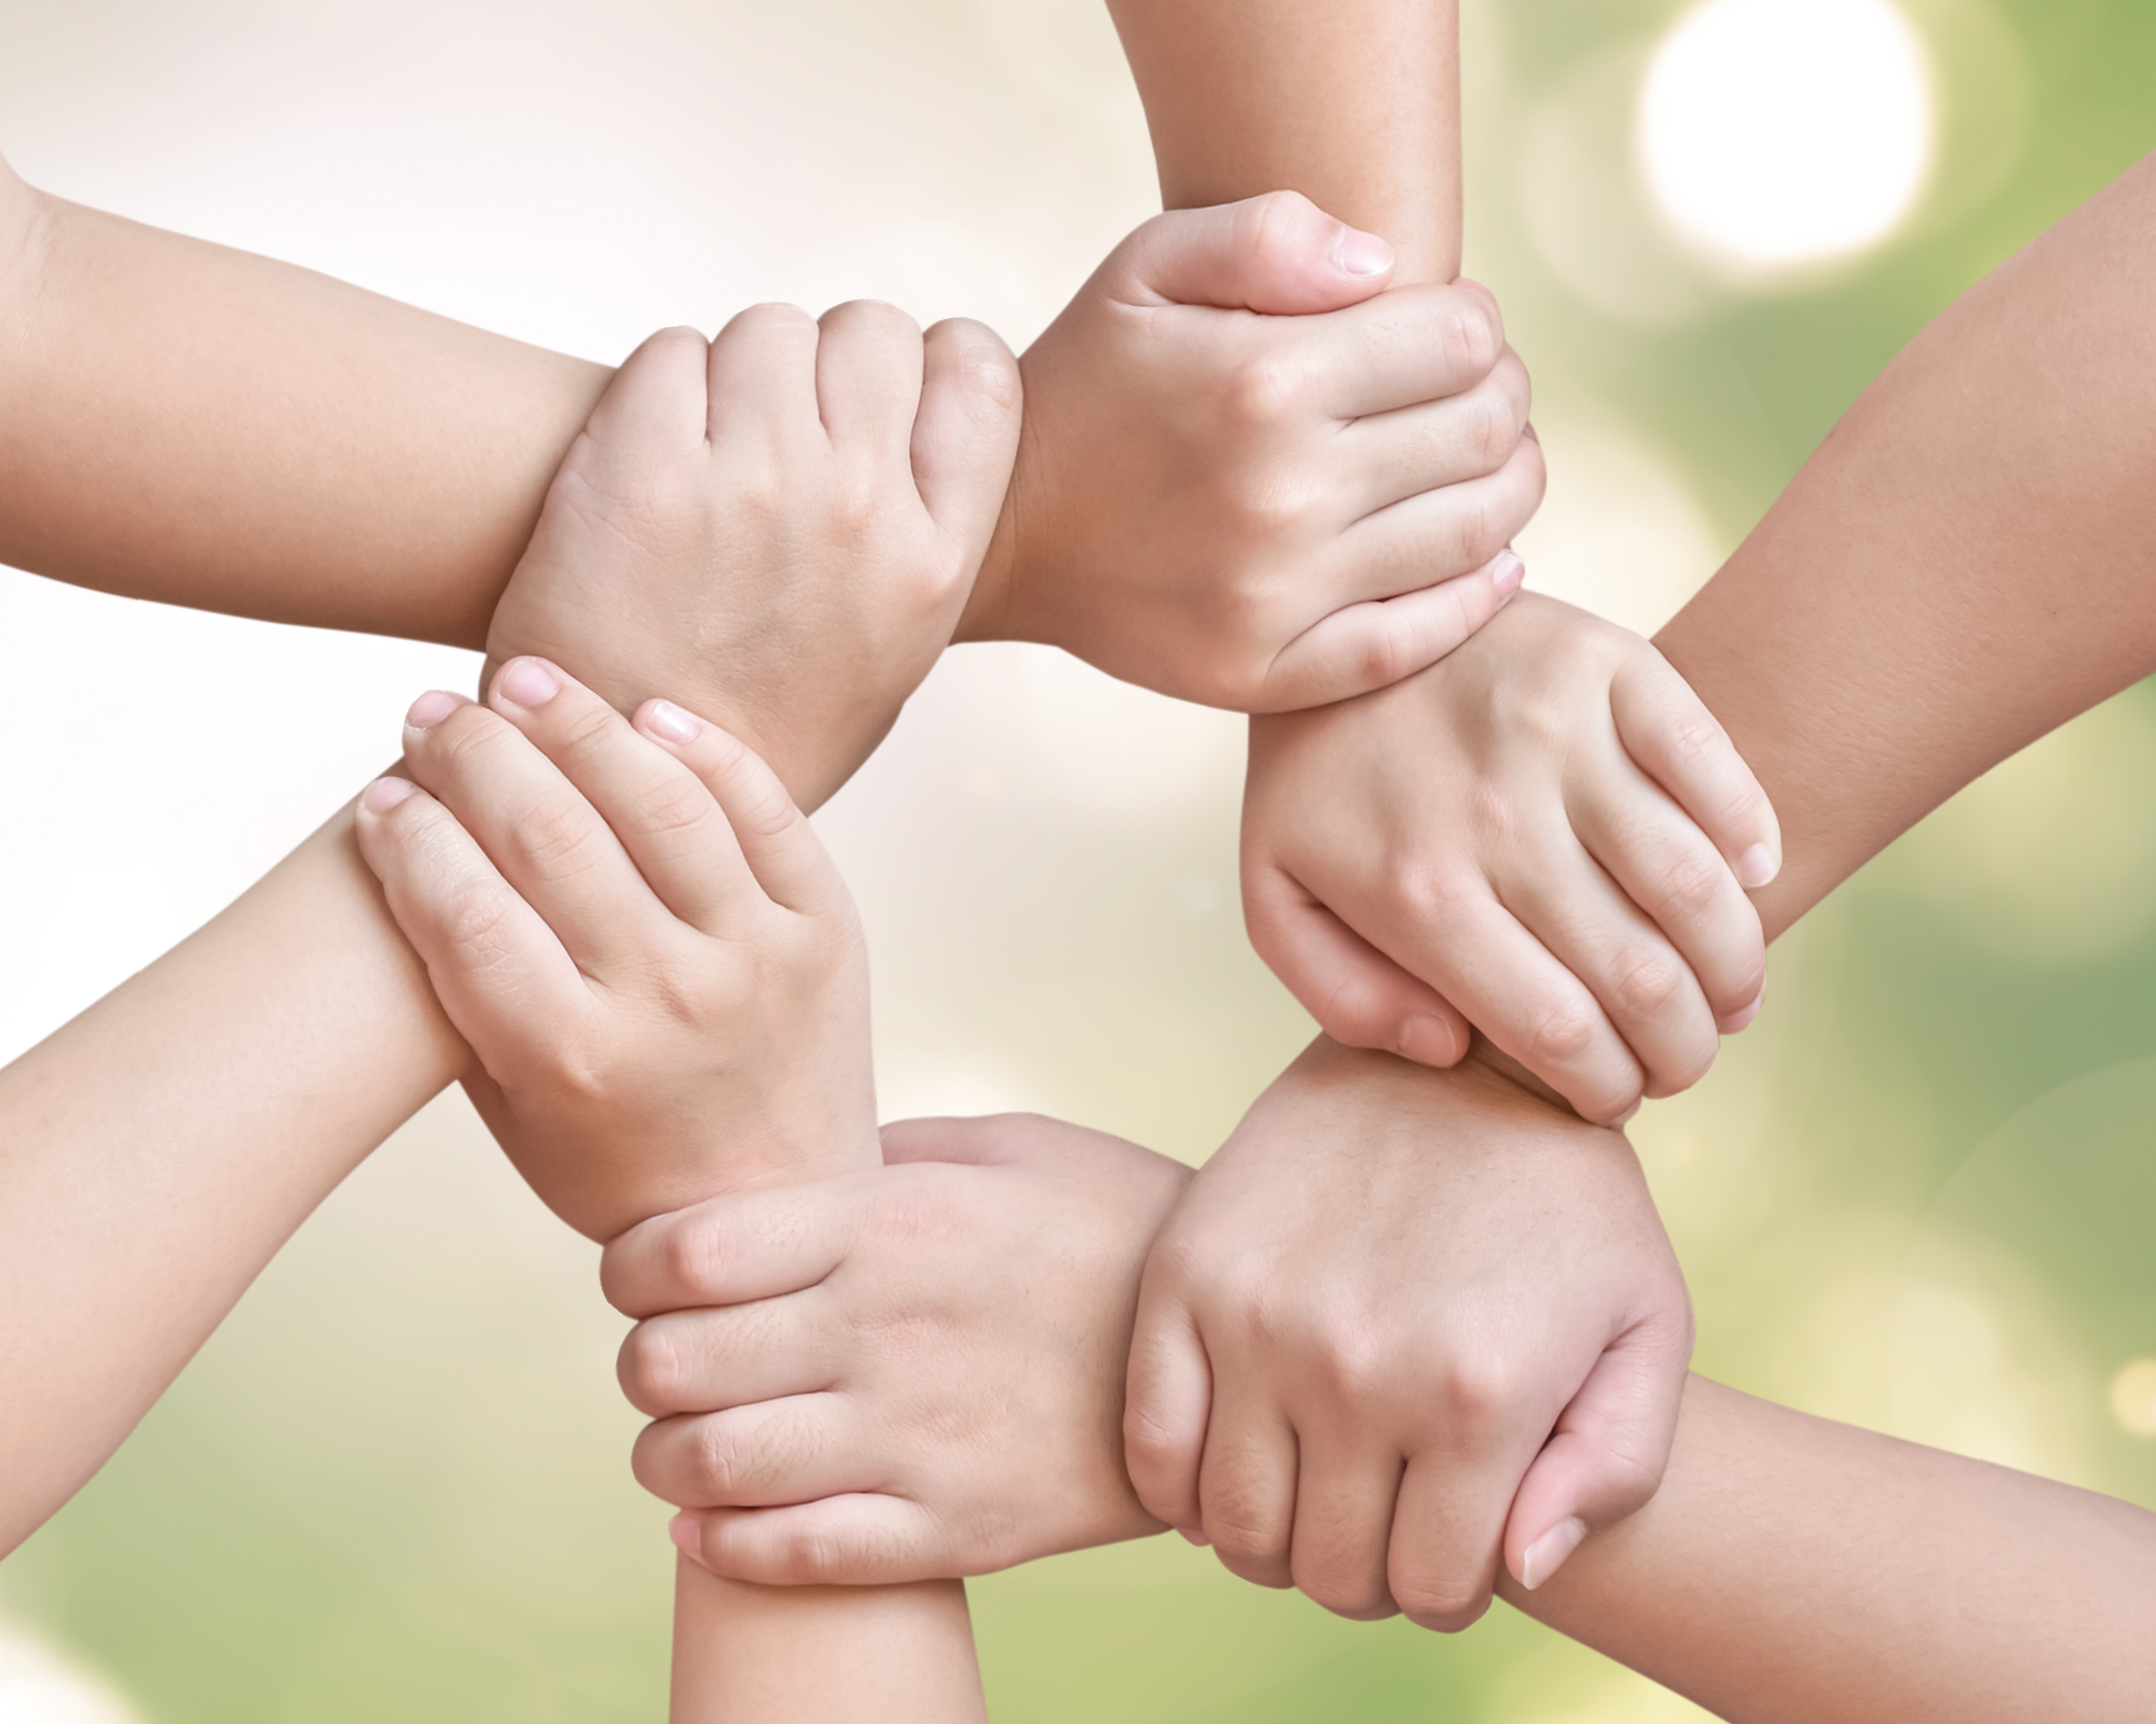 Children's hands holding each other | Source: Shutterstock